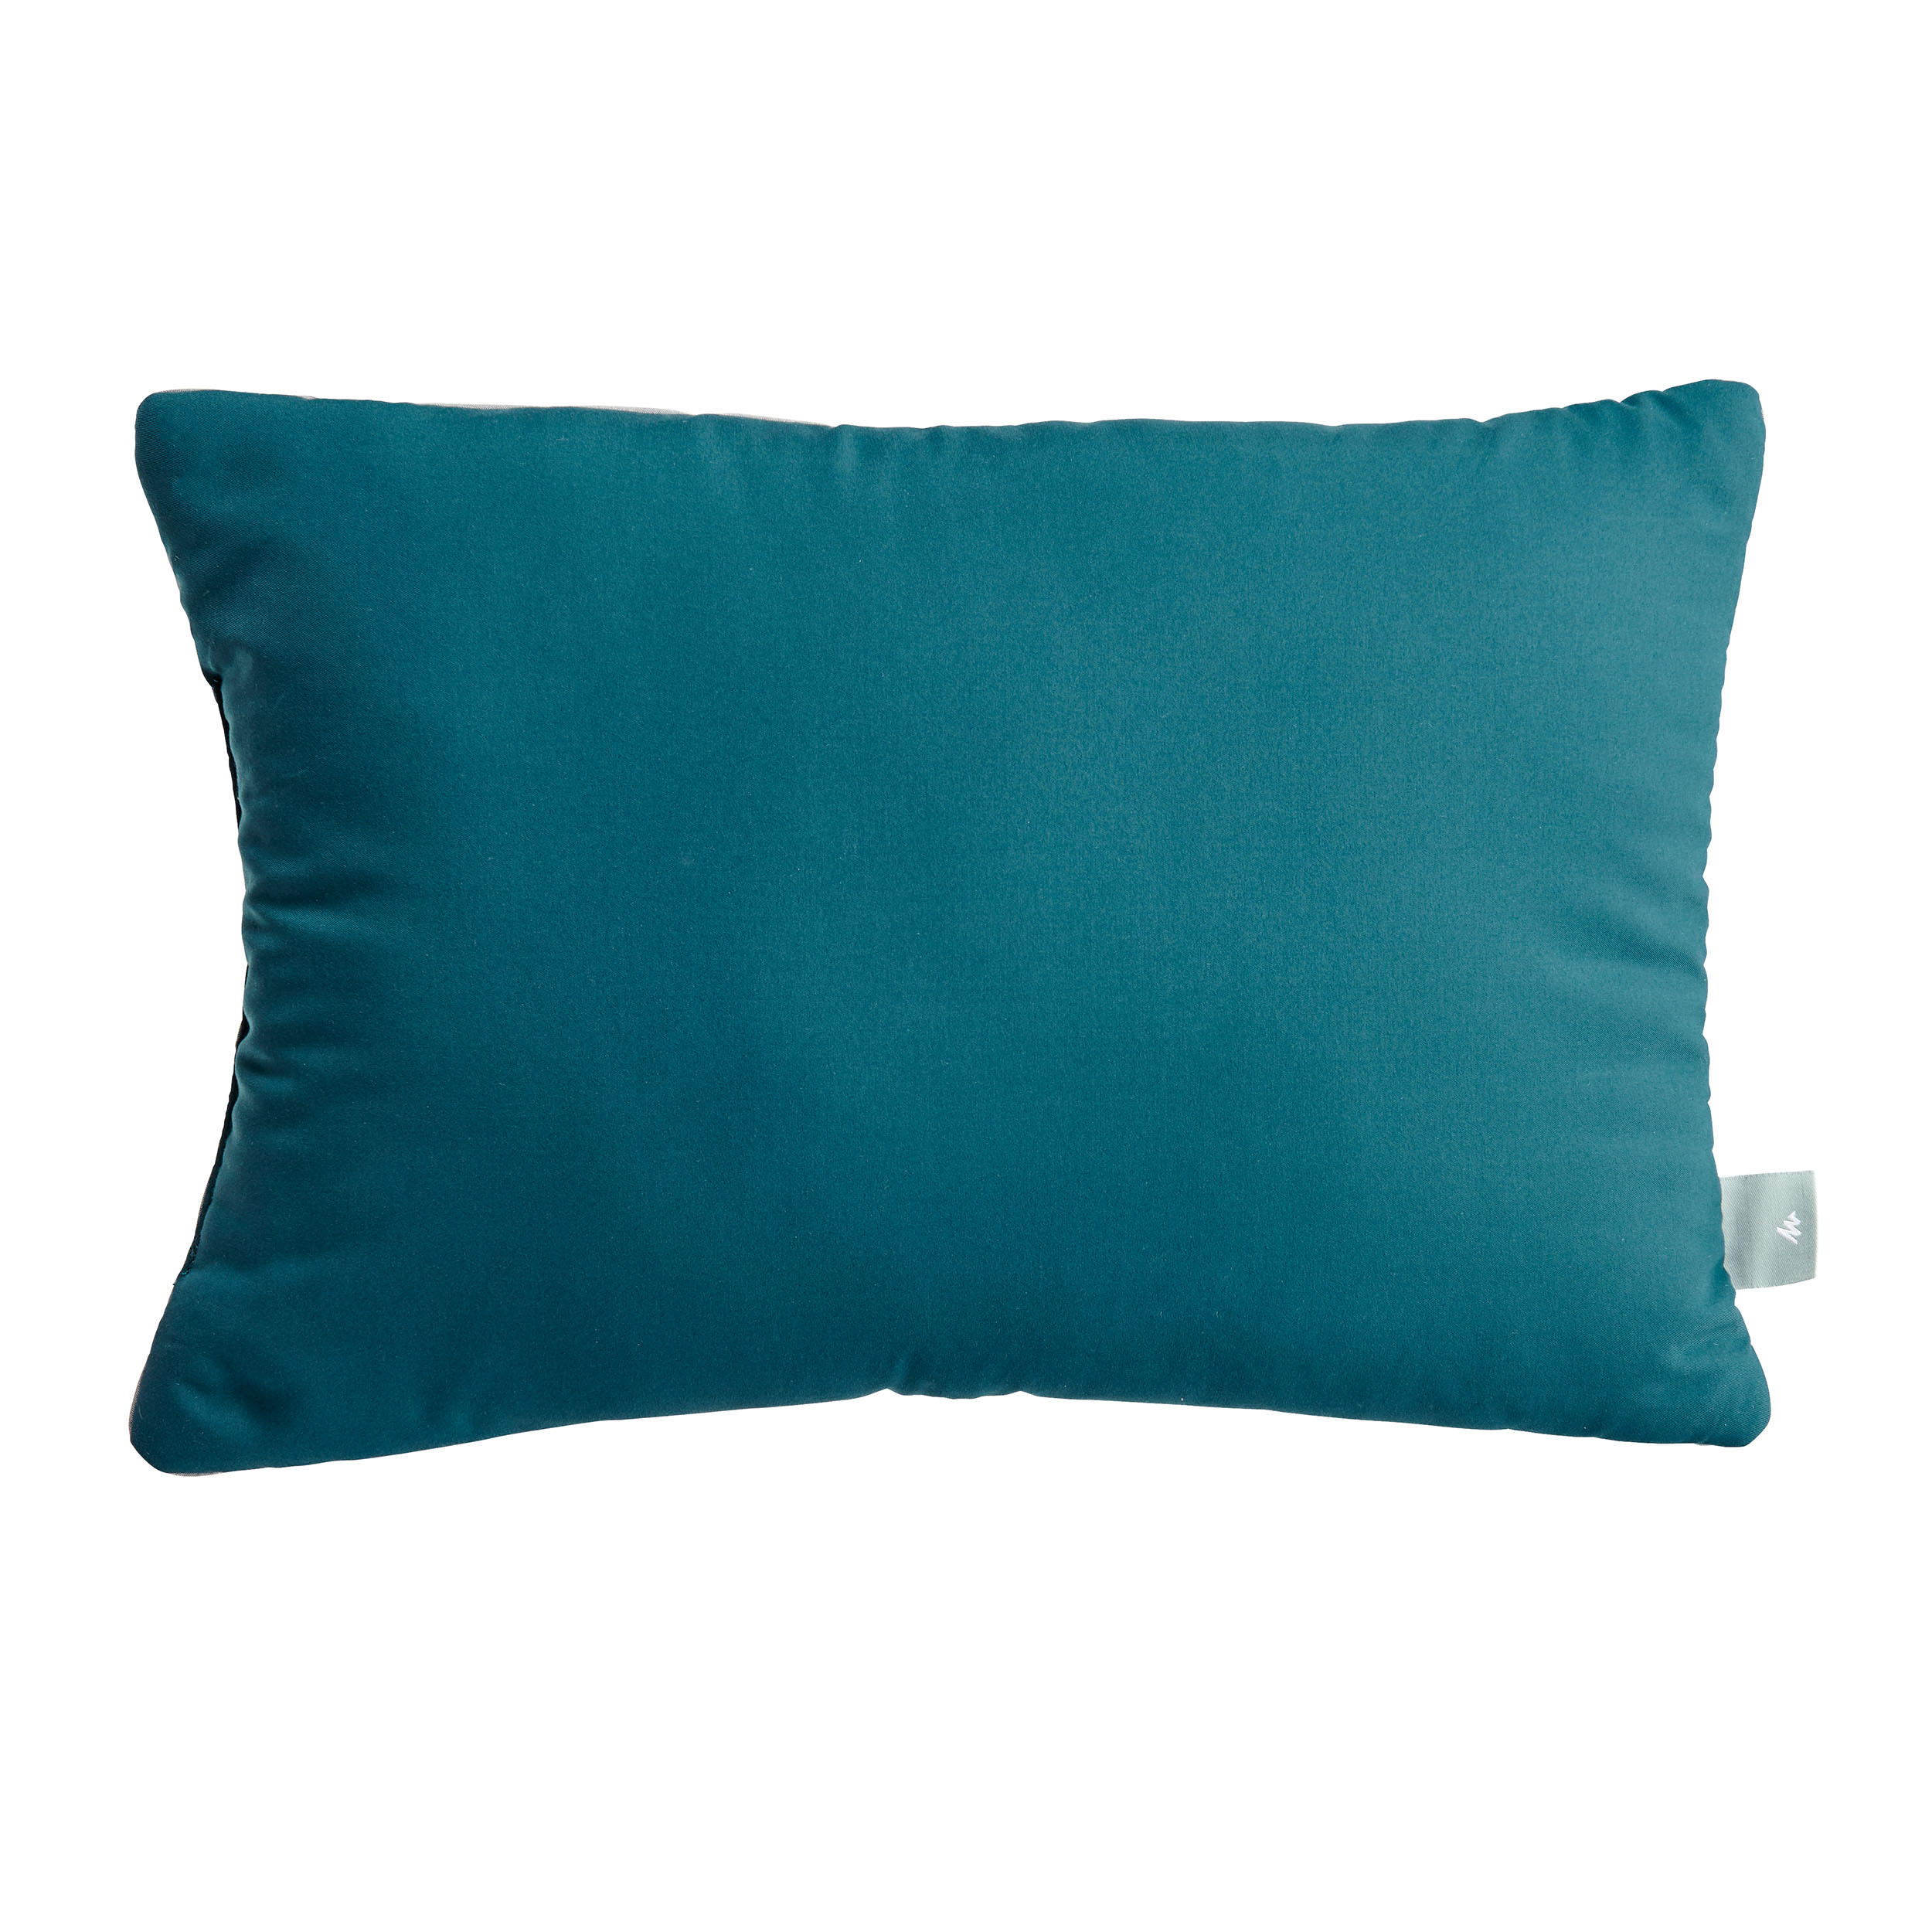 Pillows, Neck Pillow, Sleeping Mask 